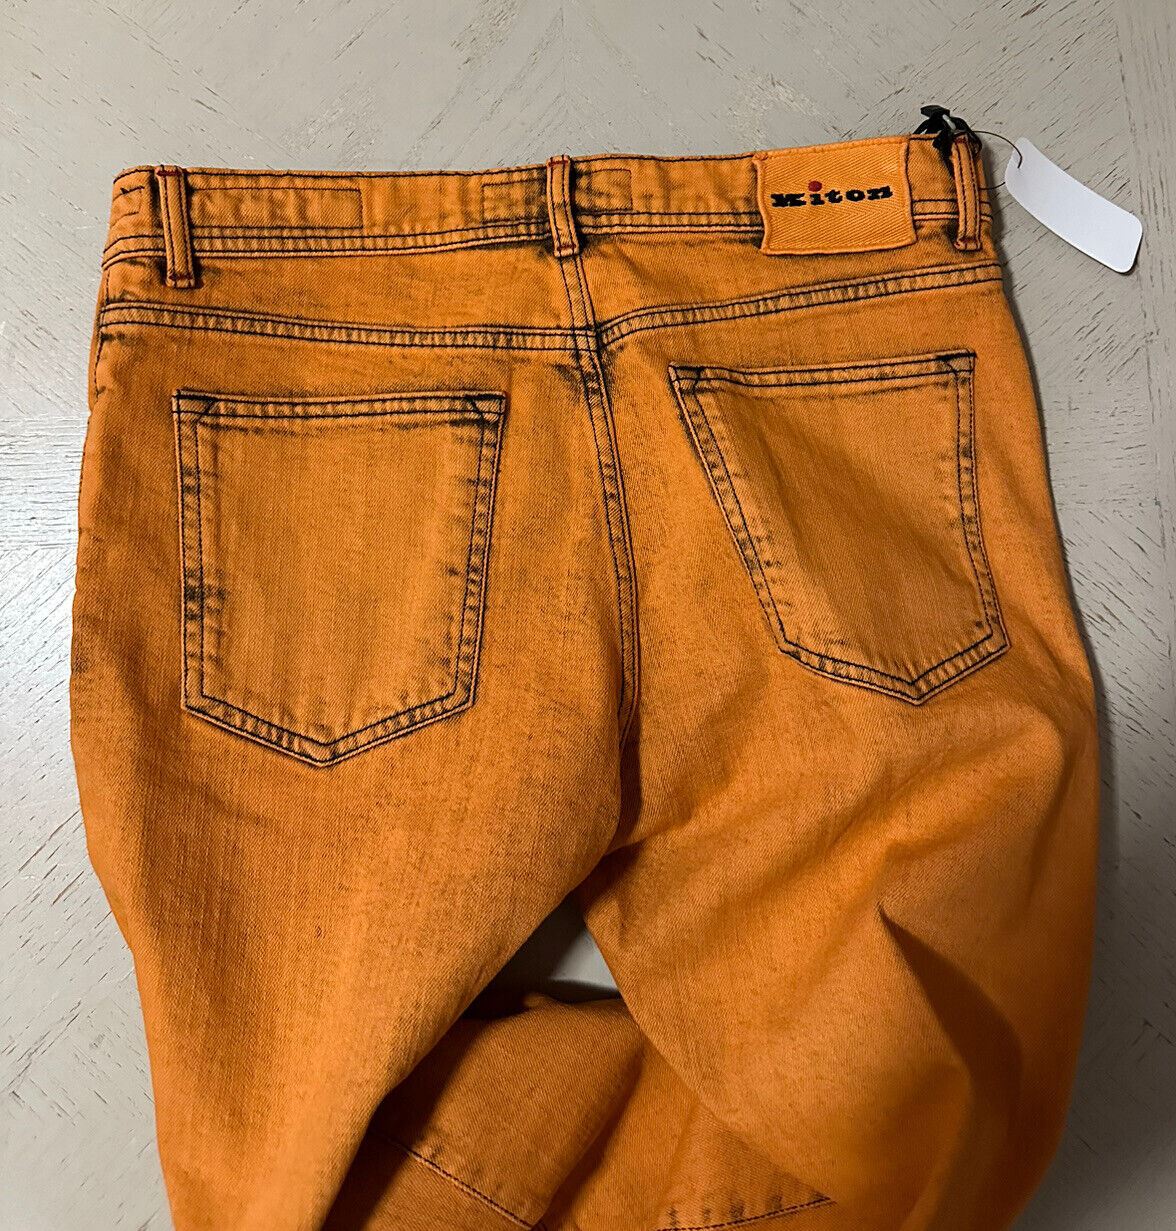 Neu mit Etikett: 1895 $ Kiton Dyed Contrast Stitch Skinny Jeans Hose Orange 34 US/50 Eu